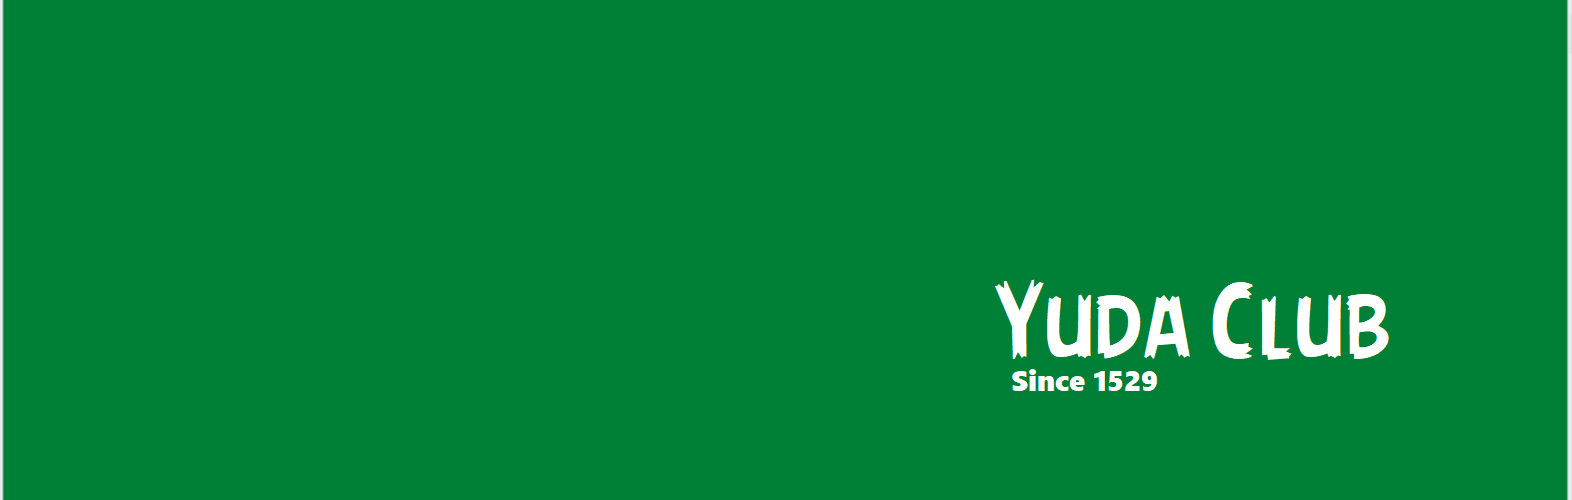 YodaClub banner